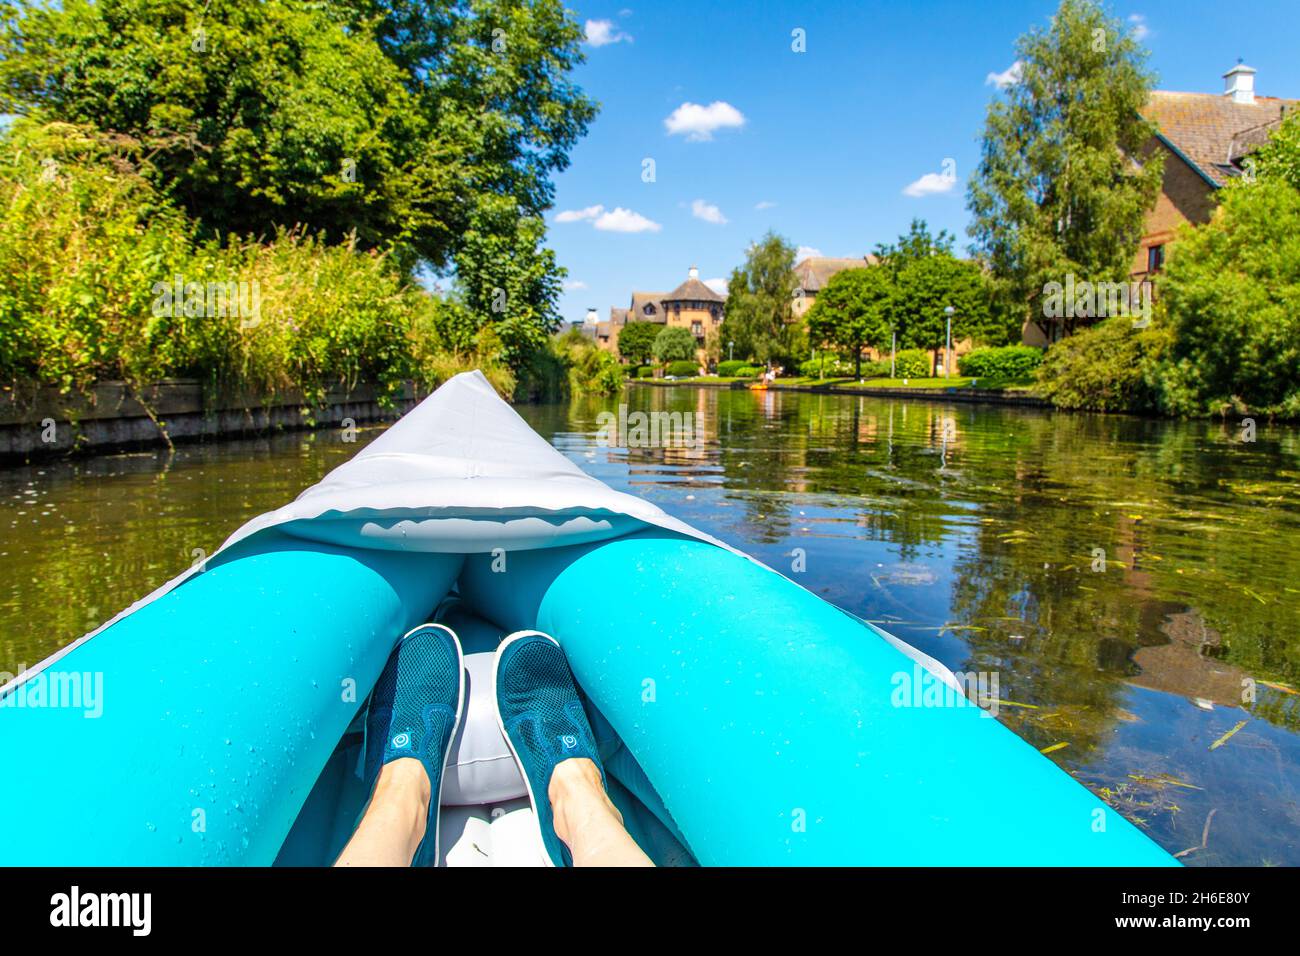 Kayaking on the River Stort in Sawbridgeworth, Hertfordshire, UK Stock Photo